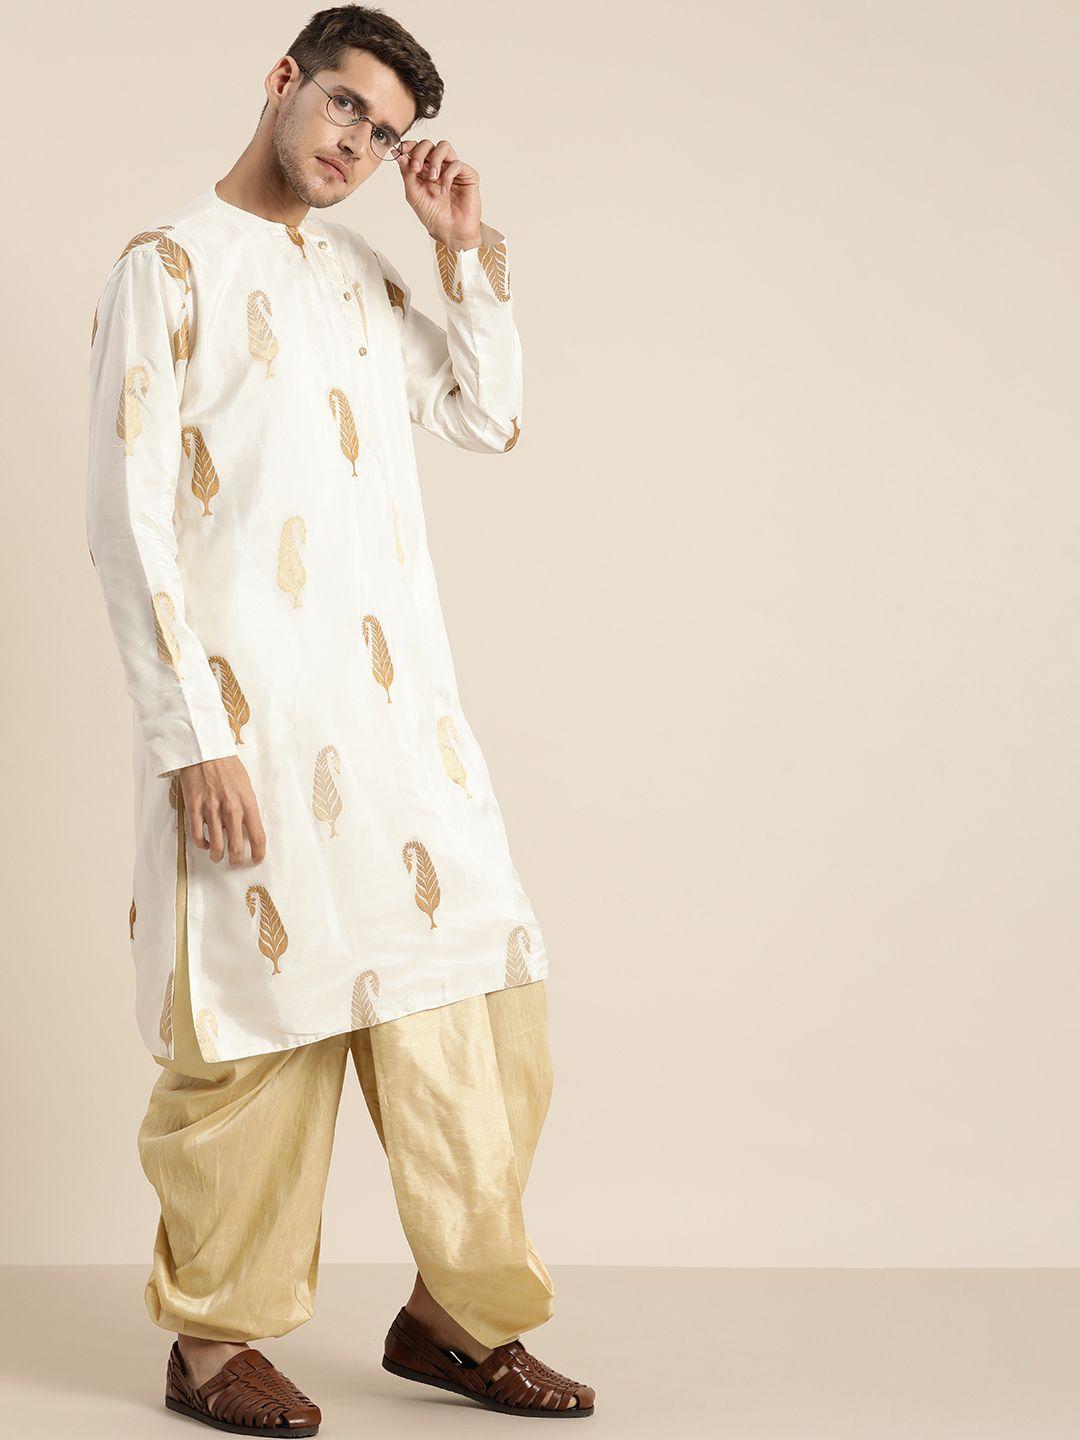 shrestha by vastramay men white & golden paisley design kurta with dhoti pants